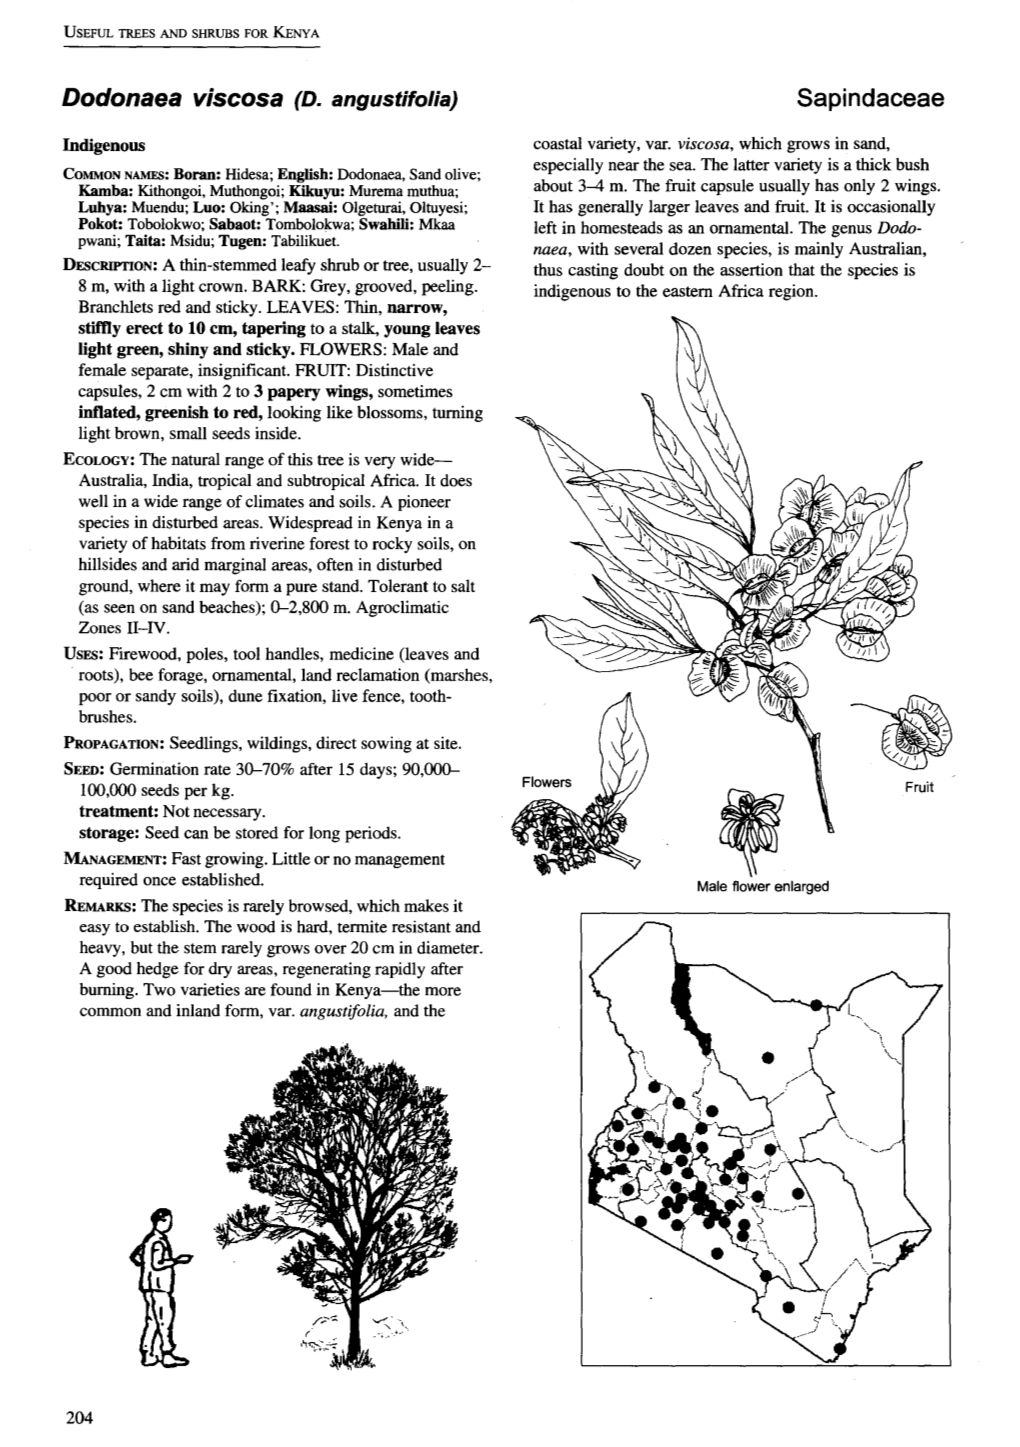 Dodonaea Viscosa (D. Angustifolia) Sapindaceae